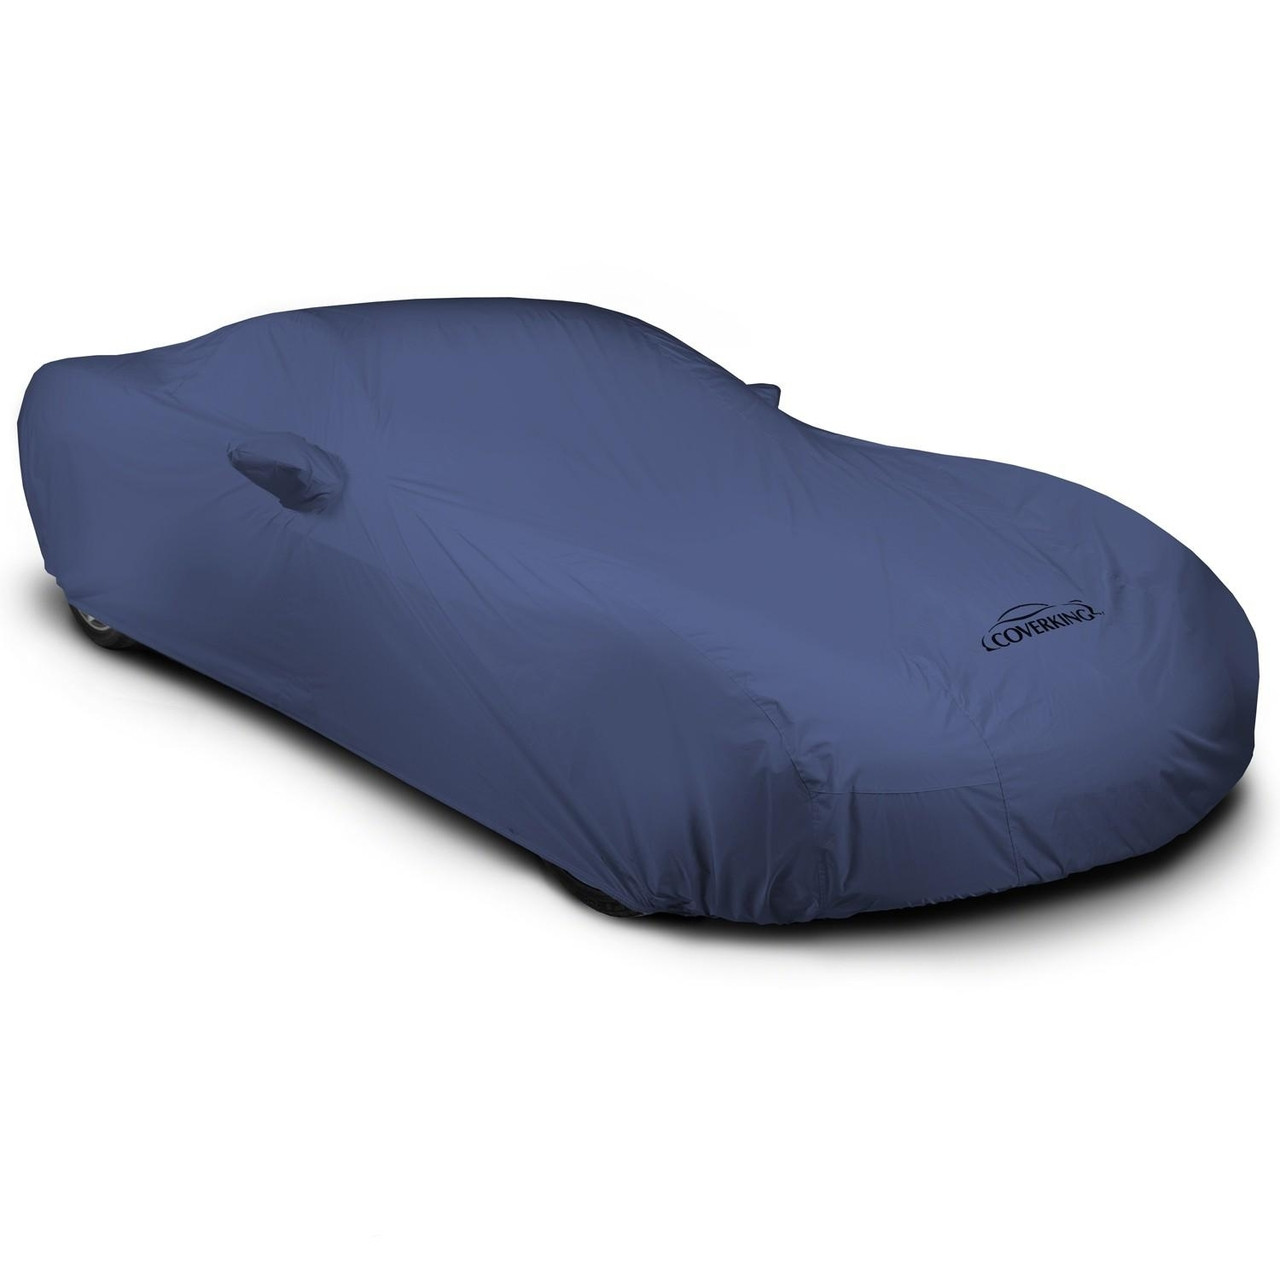 Corvette Outdoor Car Cover - Blue